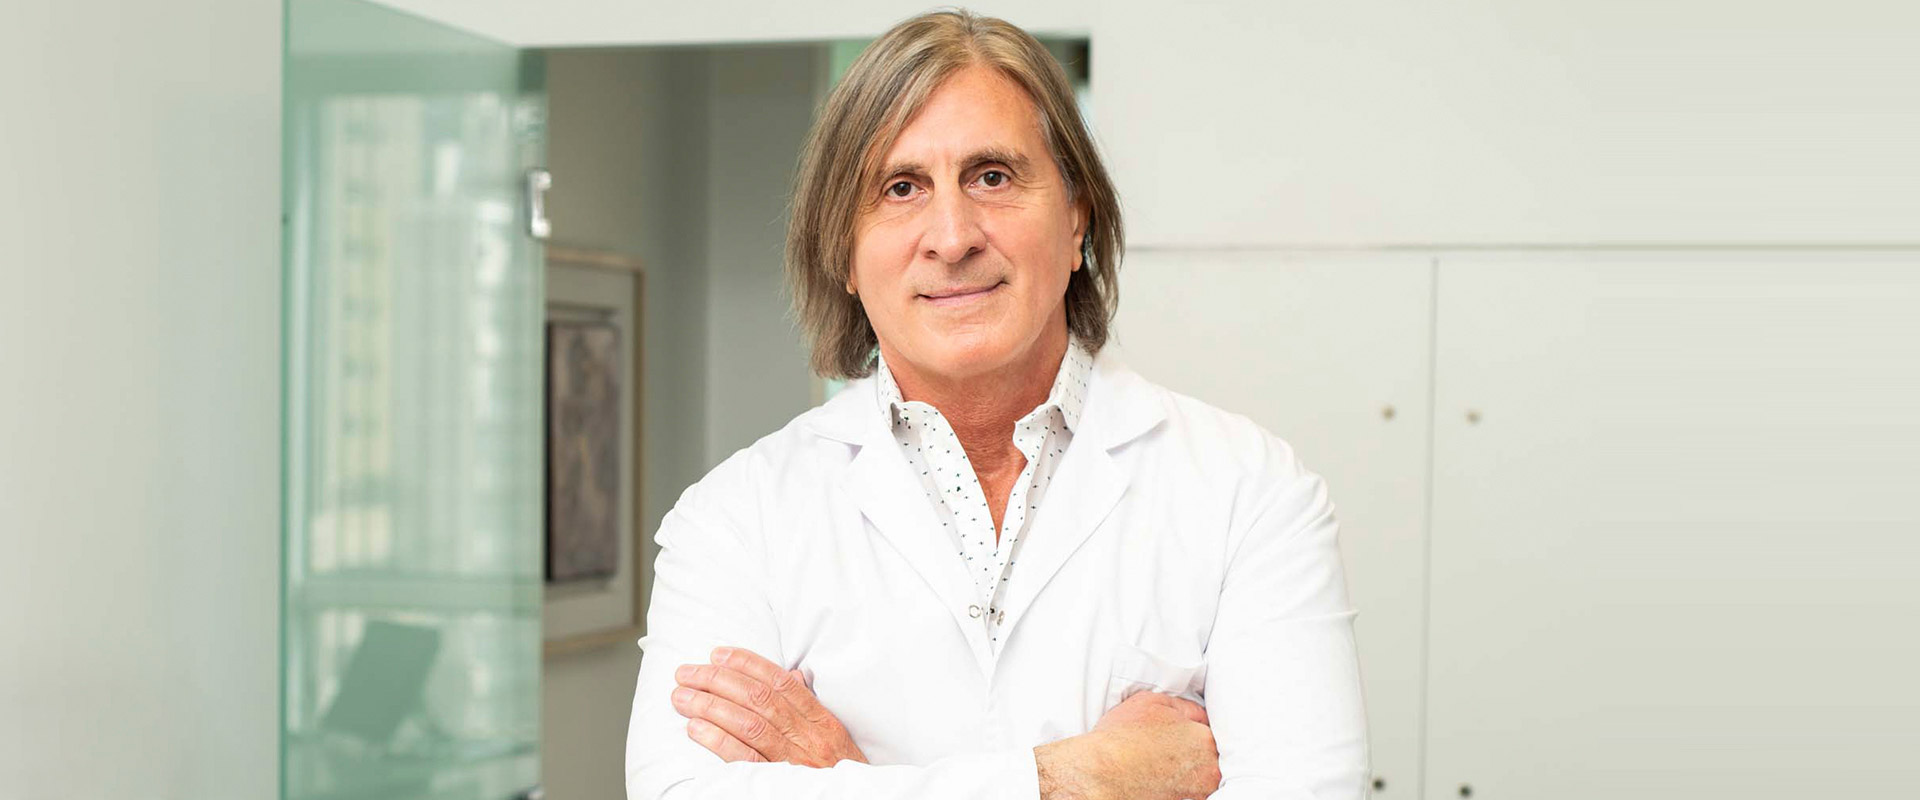 Dr Humberto Dionisi - Ginecologo y Cirujano Ginecologico - Especialista en Endometriosis y Laparoscopia - Cordoba Argentina